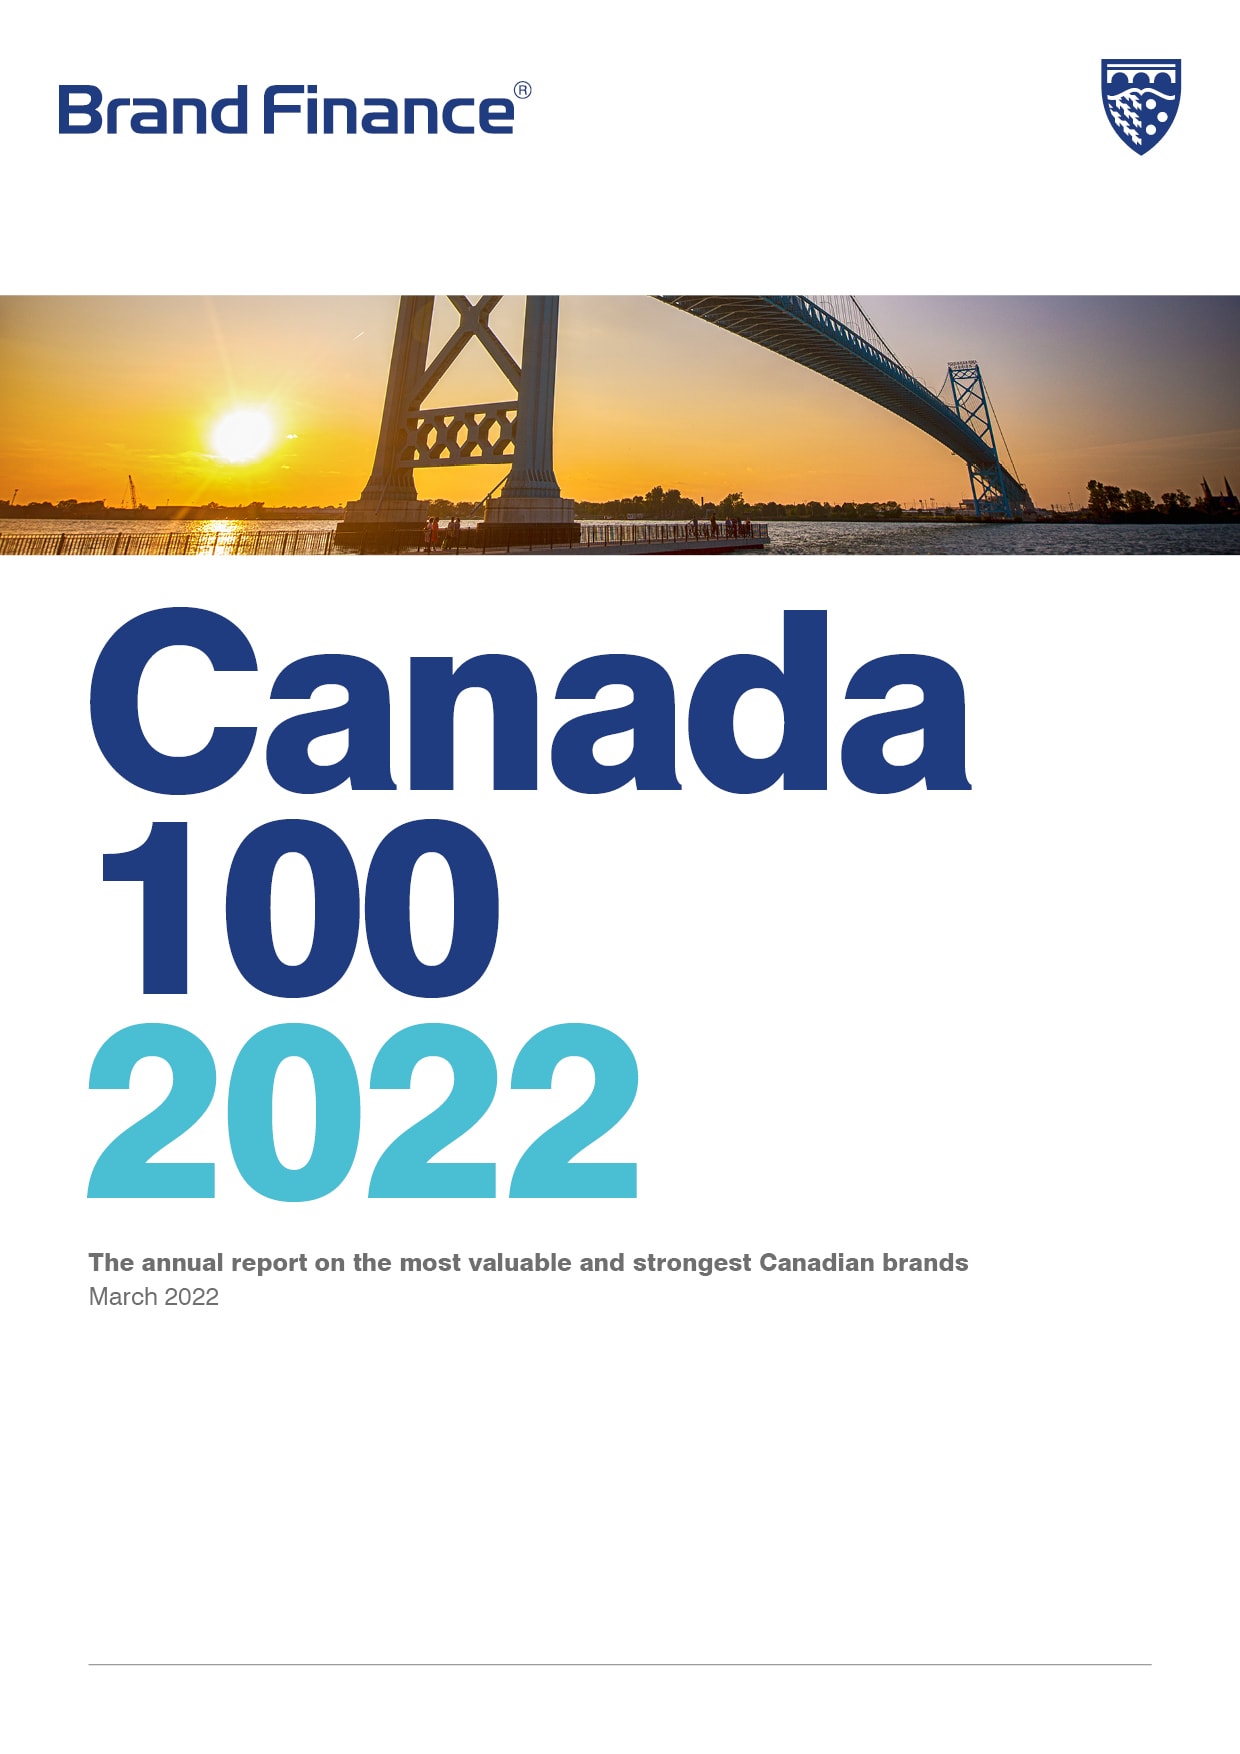 Brand Finance Canada 100 2022